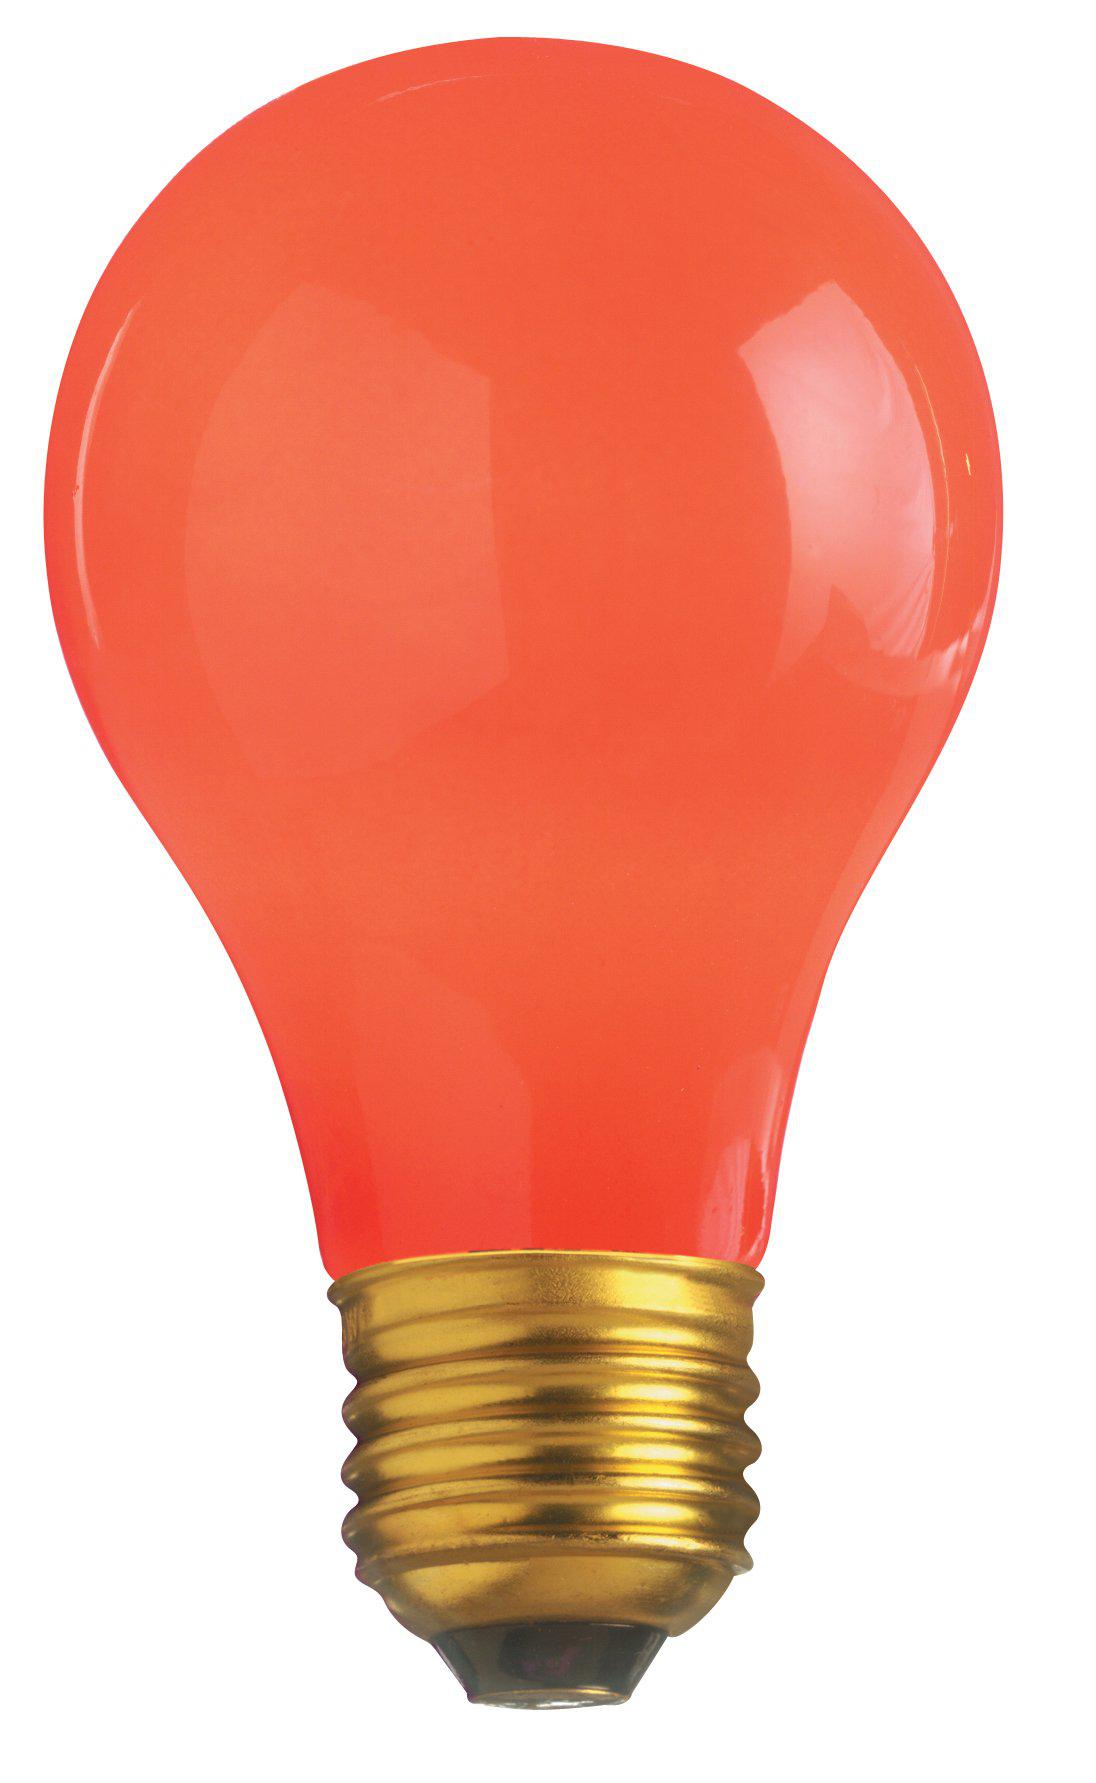 satco s4984 60 watt a19 incandescent light bulb, ceramic red